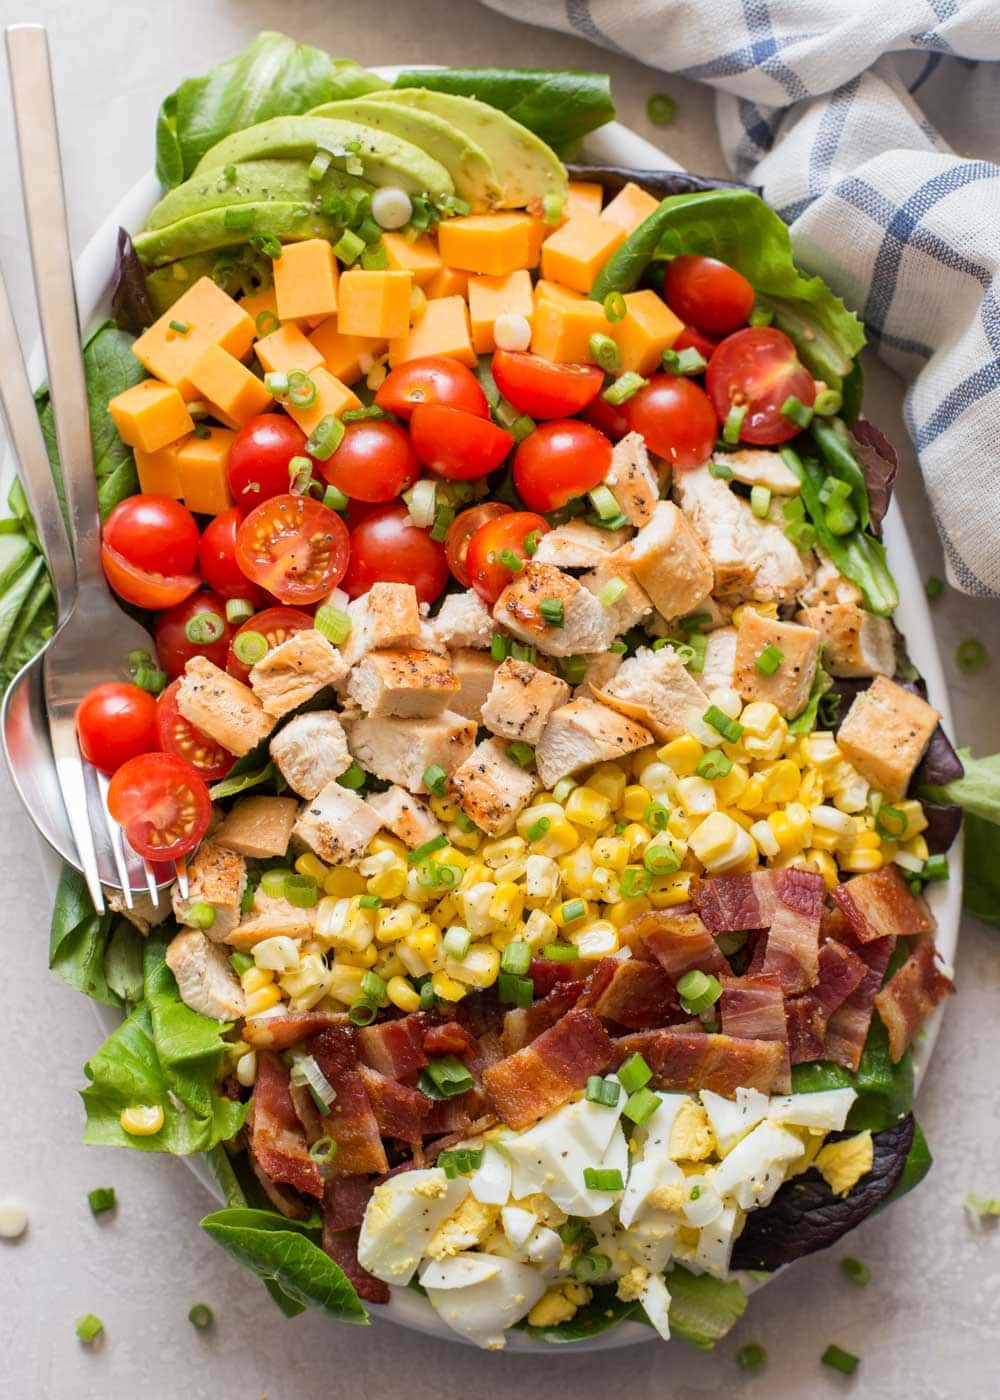 Cobb salad recipe assembled in a large salad bowl.